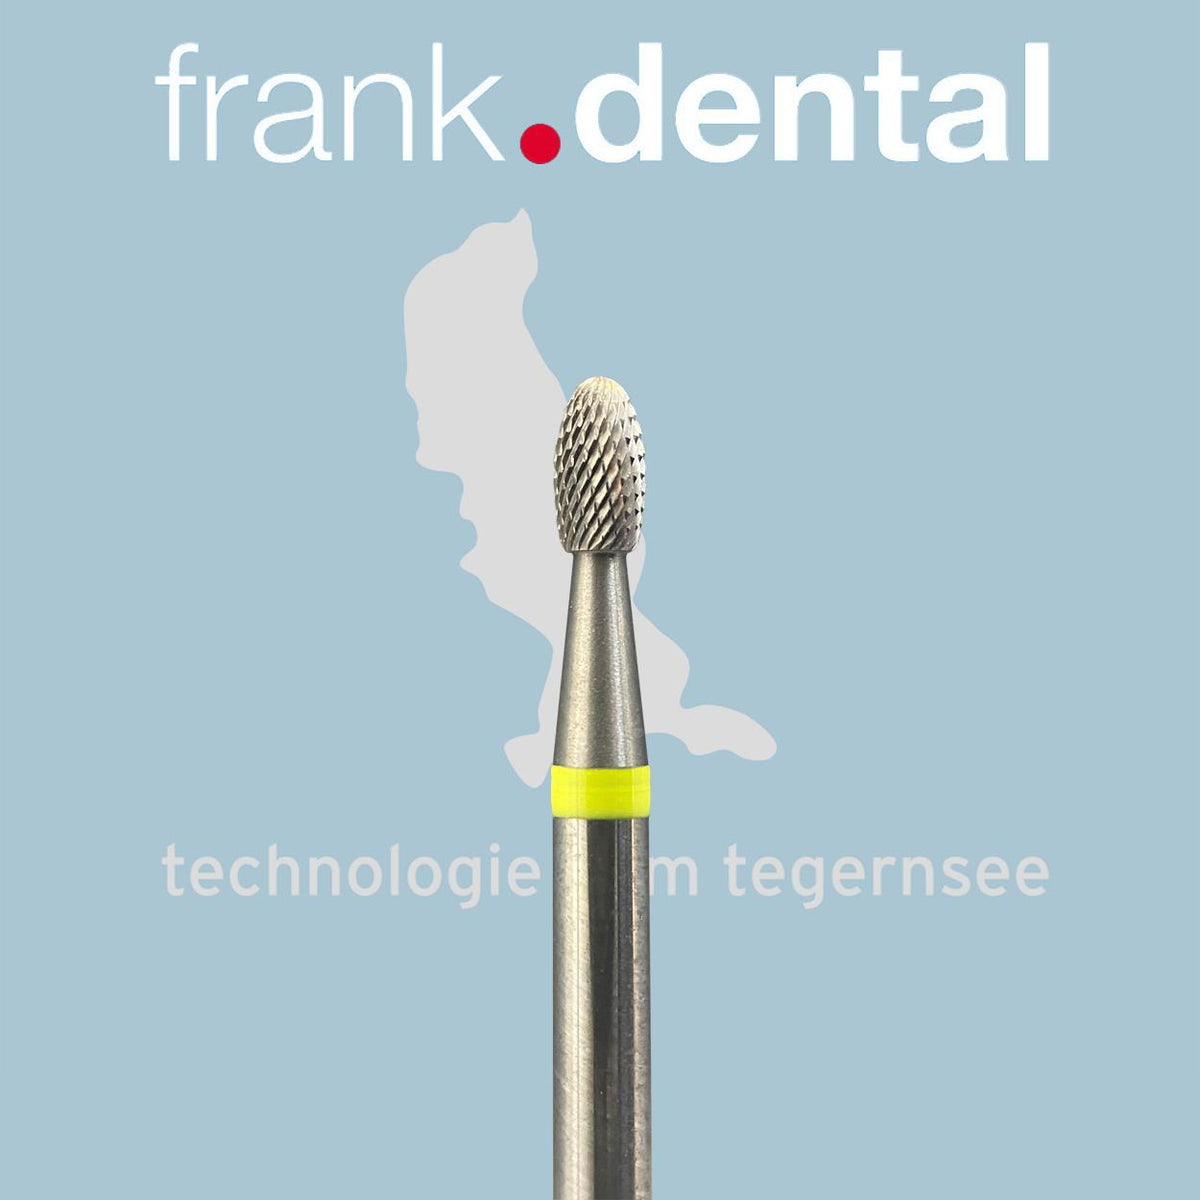 DentrealStore - Frank Dental Tungsten Carpide Monster Hard Burs - 73KSF